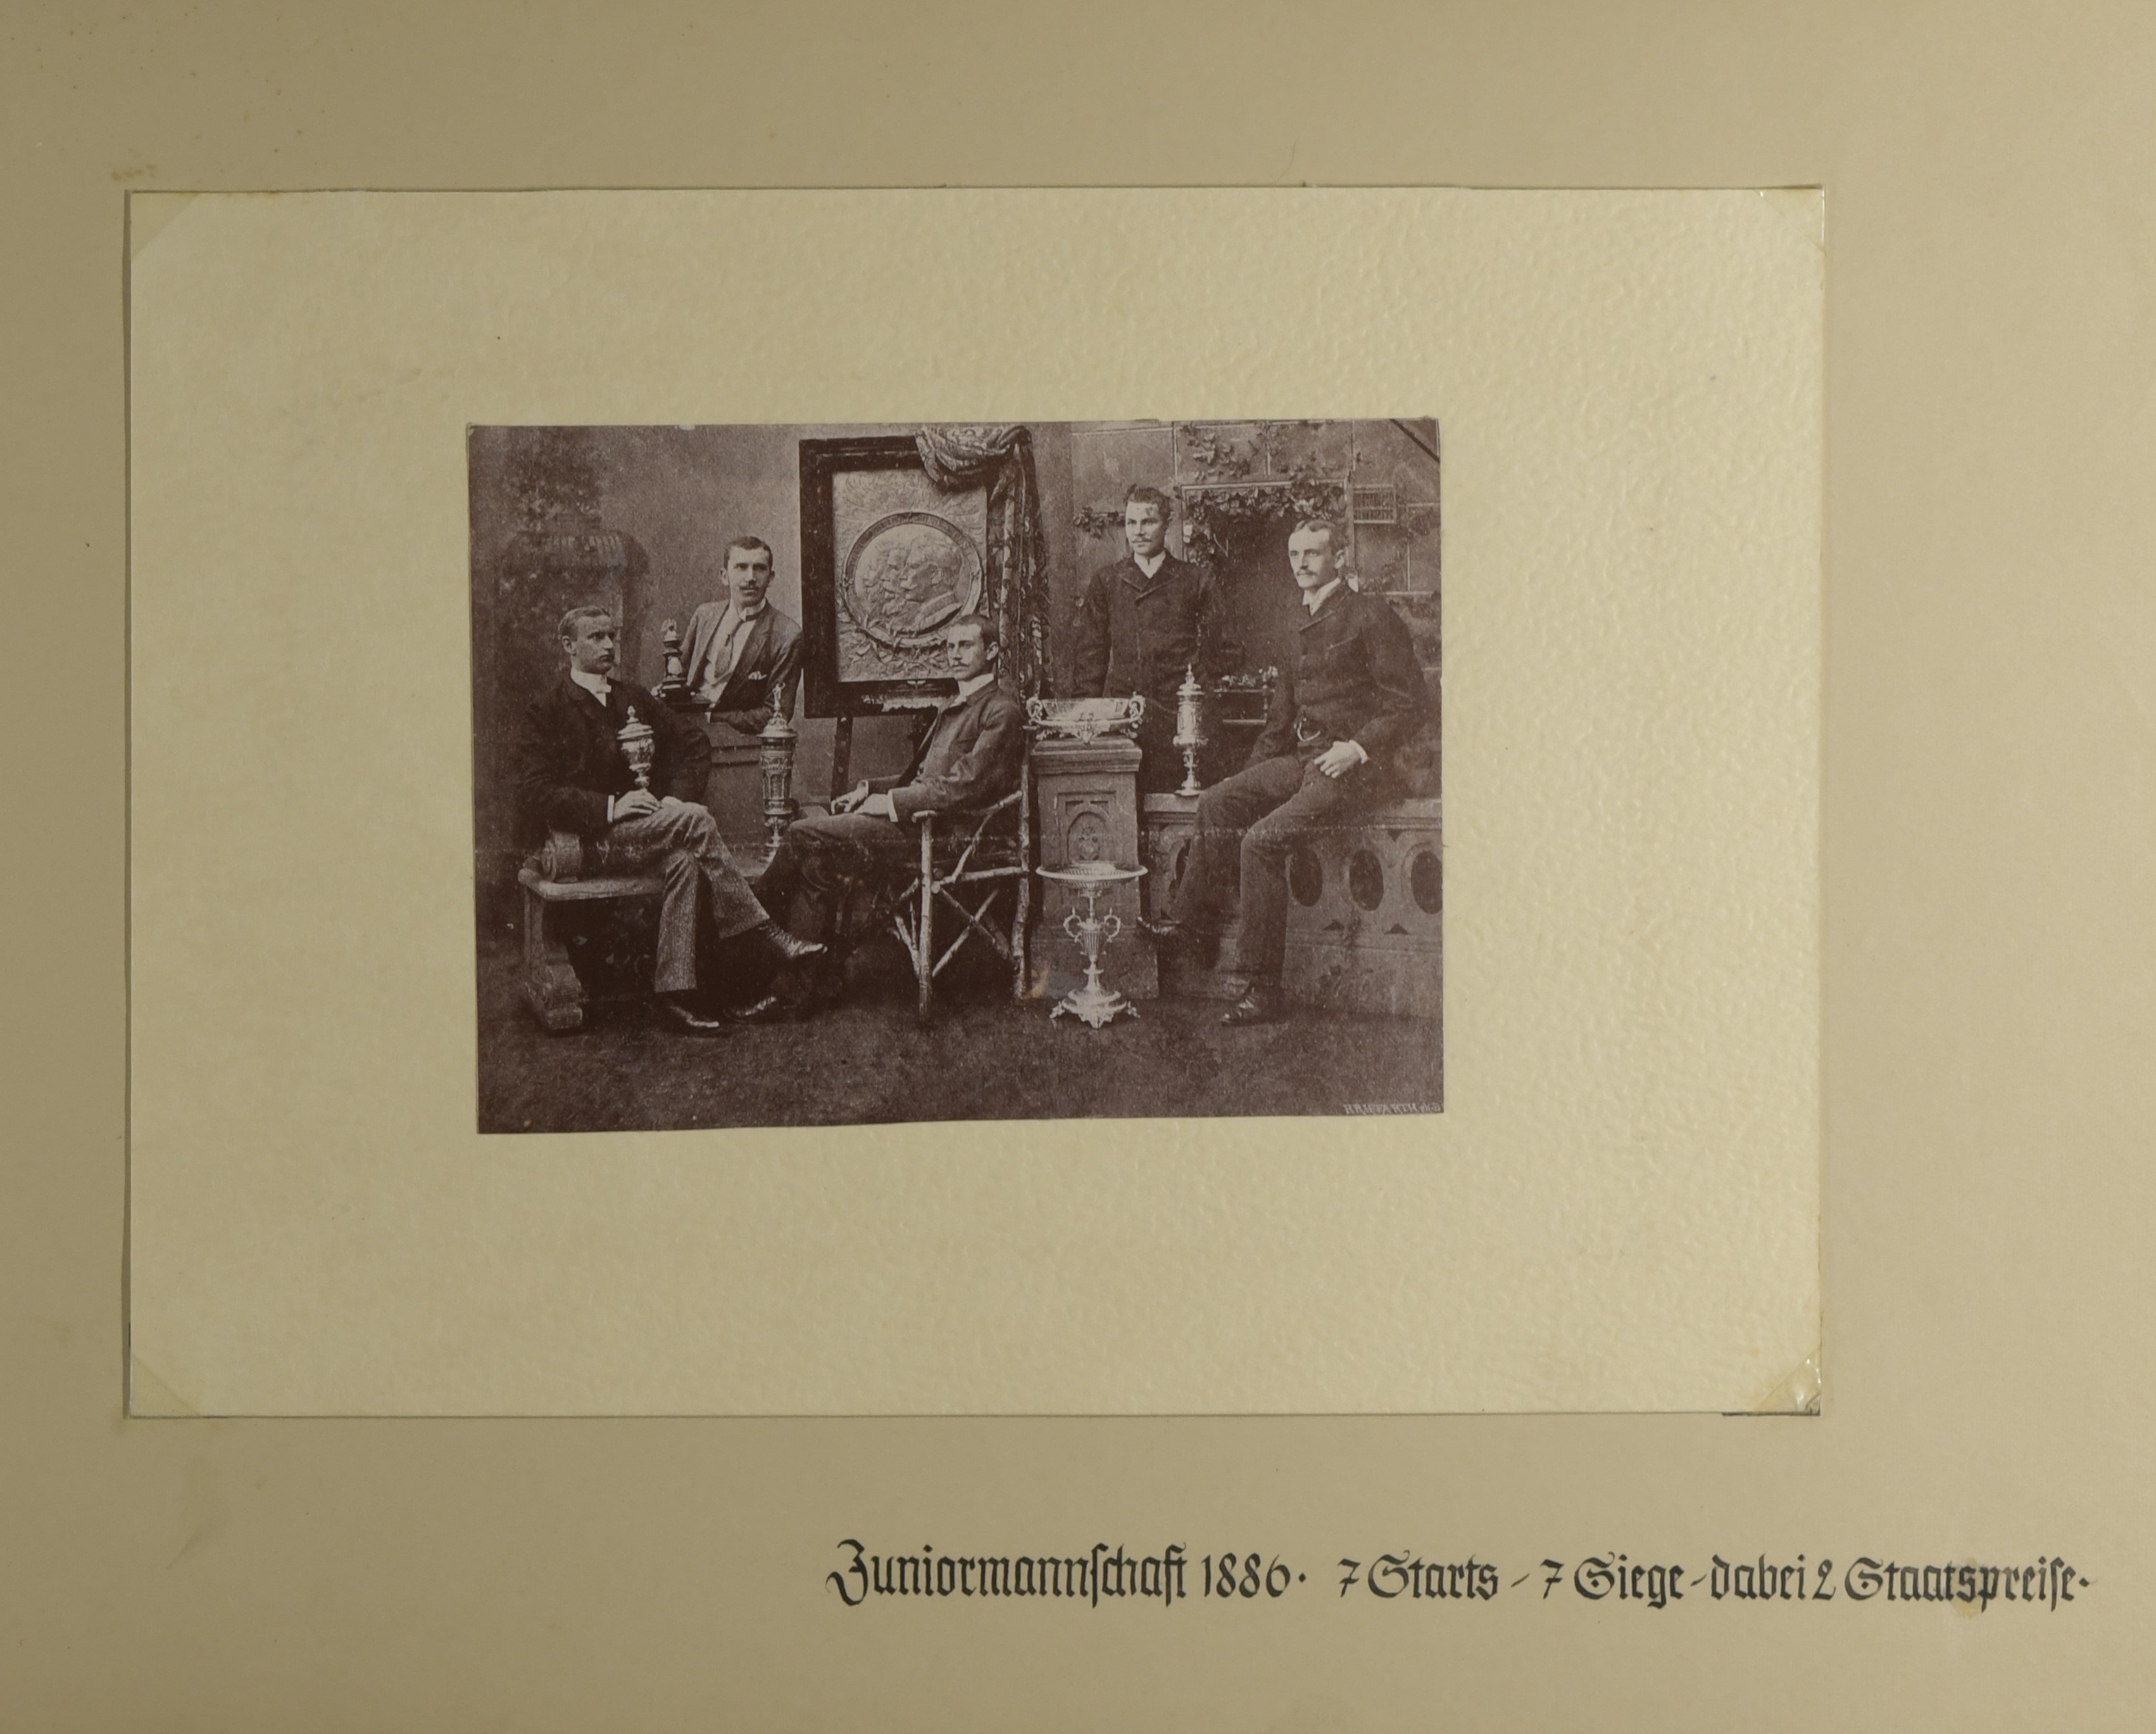 Album des Berliner Ruder-Vereins von 1976 e.V.; Juniormannschaft 1886 (Sportmuseum Berlin CC0)